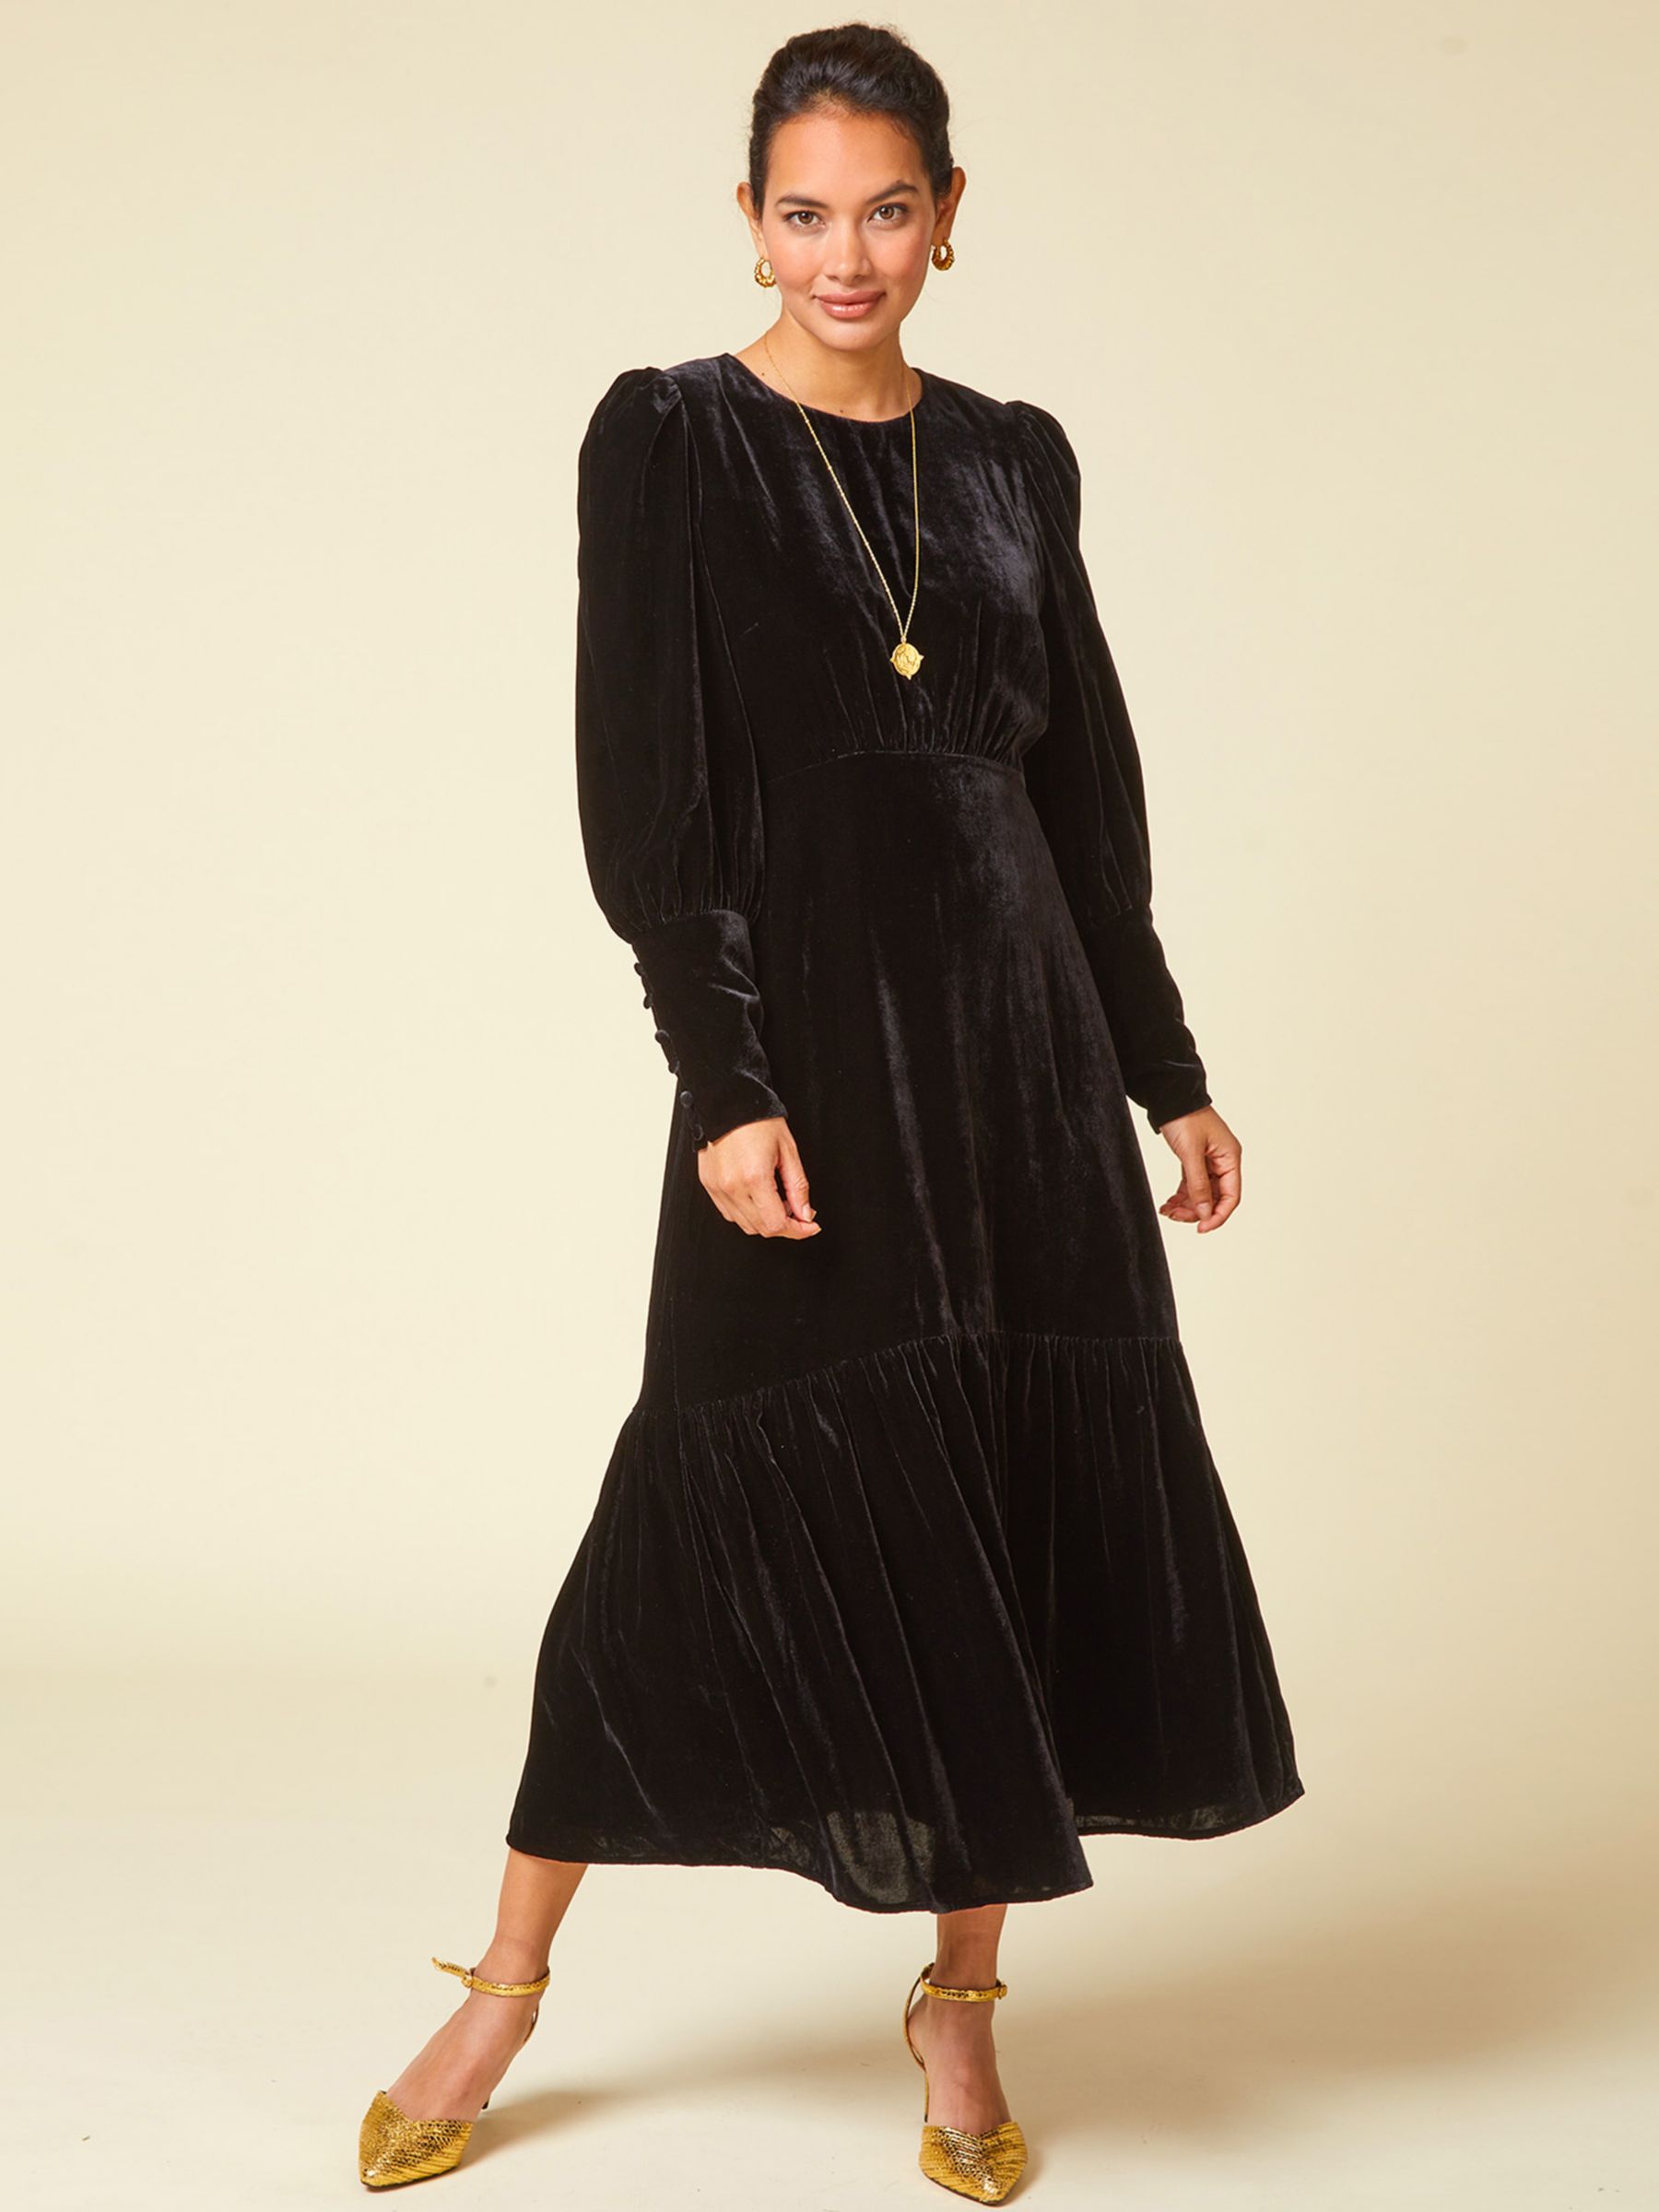 Aspiga Esmee Velvet Dress, Black at John Lewis & Partners